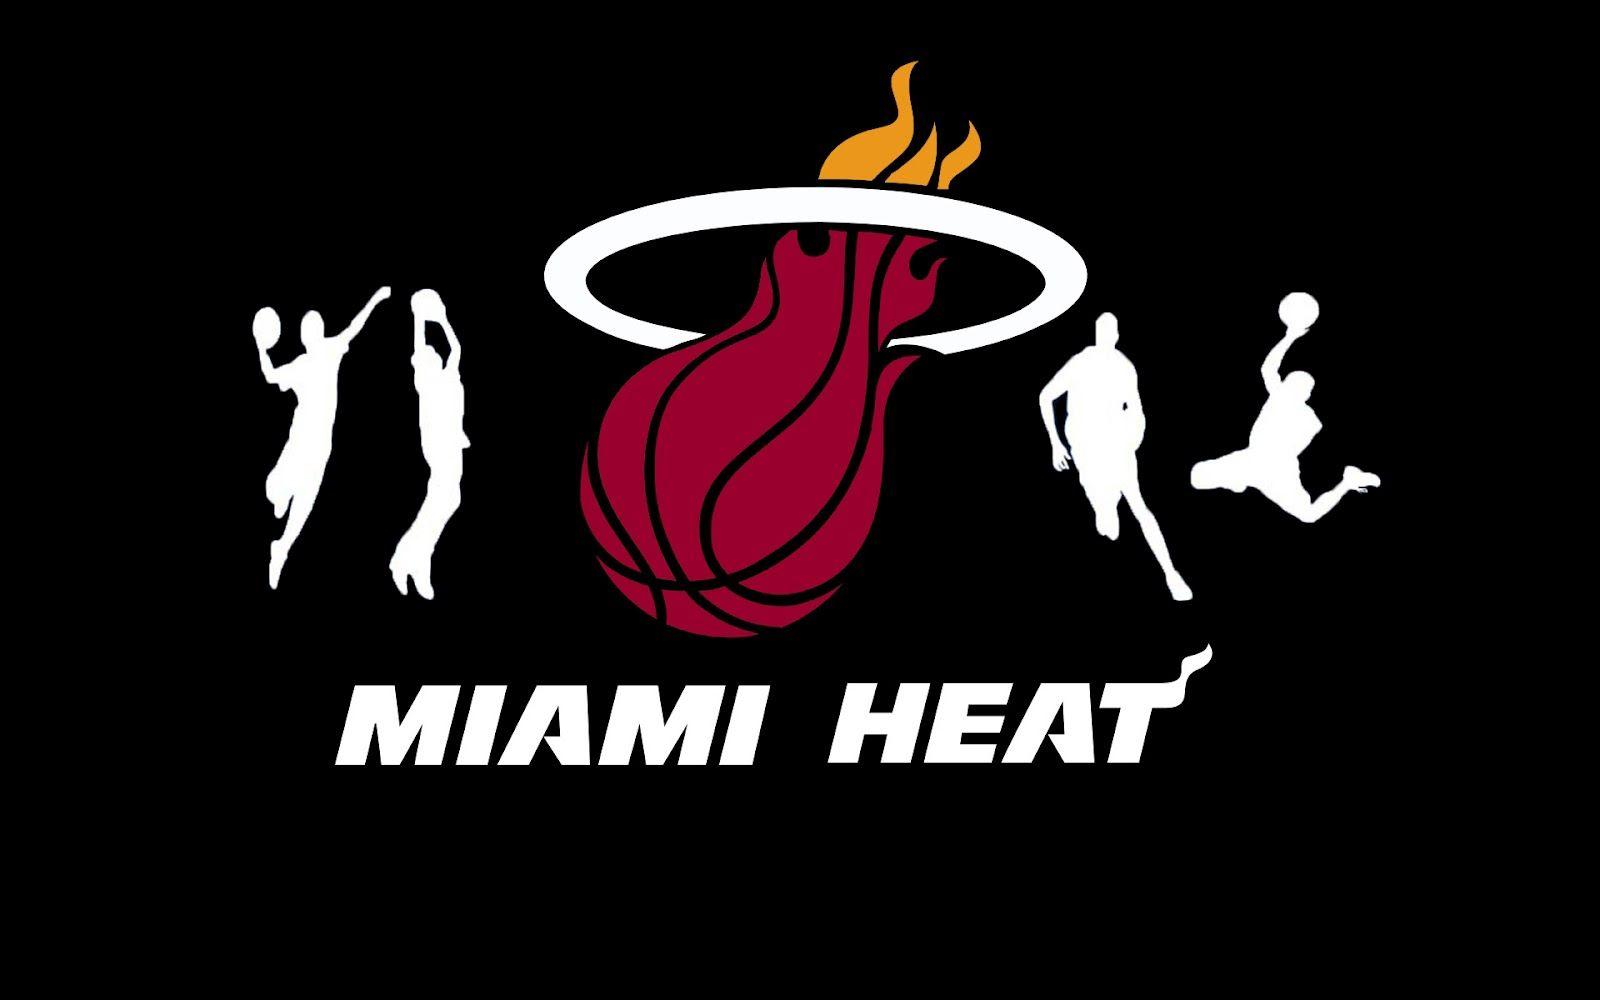 Miami Heat Team 7 181531 High Definition Wallpaper. wallalay